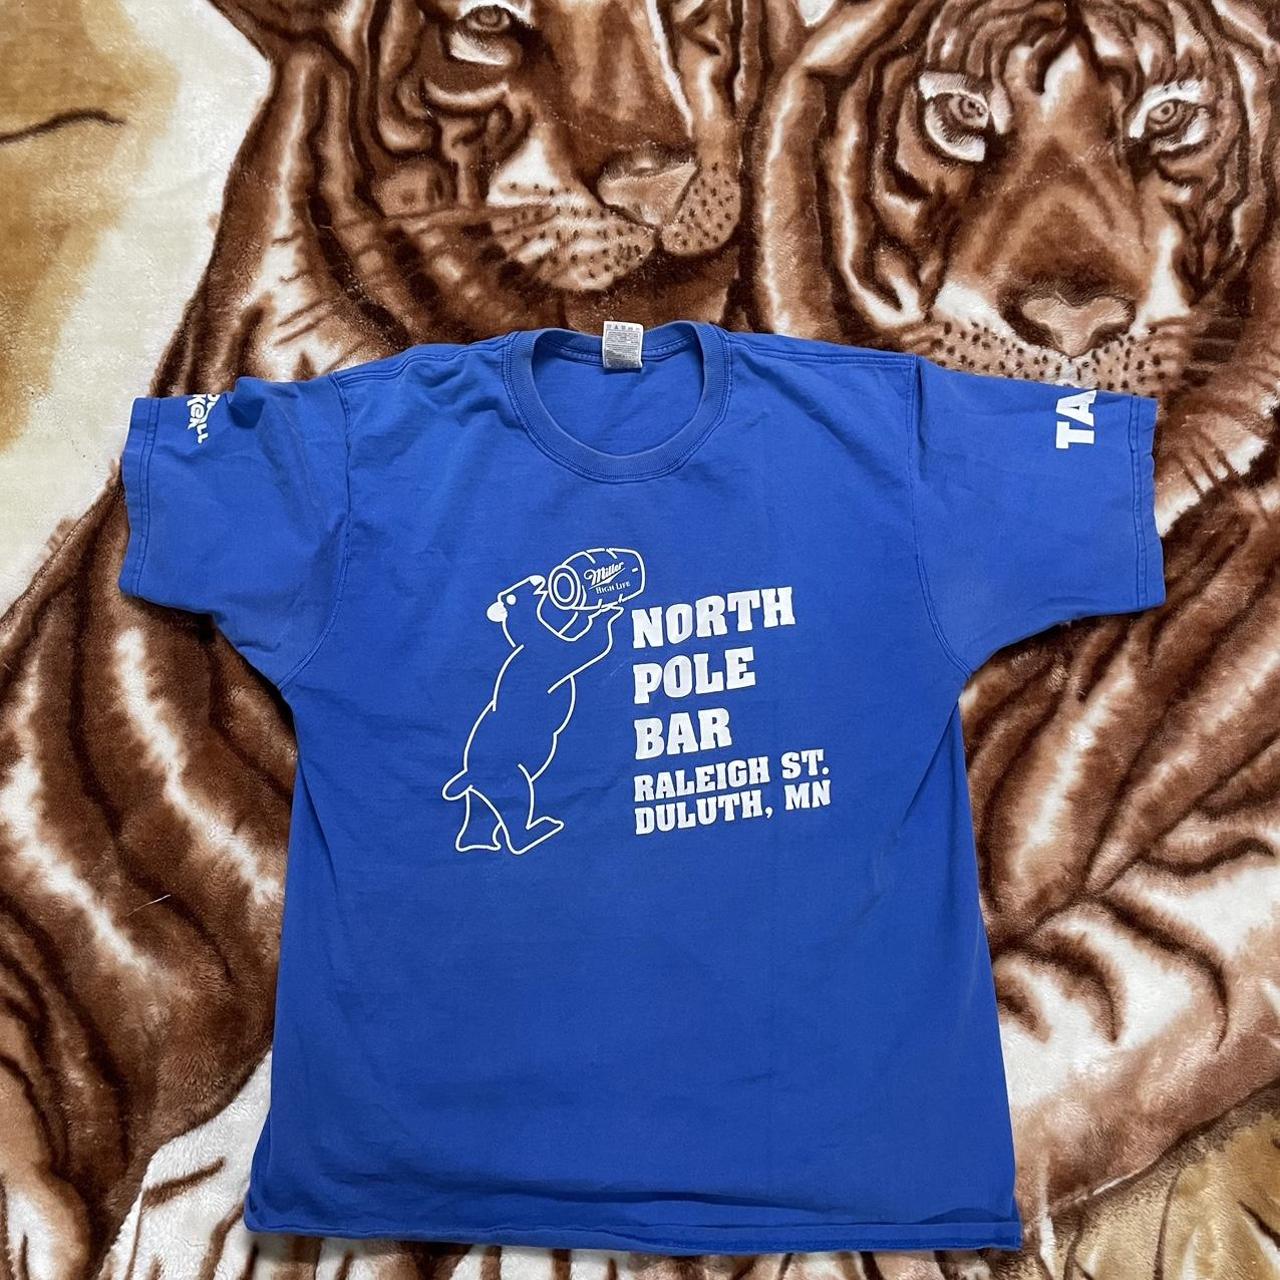 MINNEAPOLIS MILLERS' Men's T-Shirt